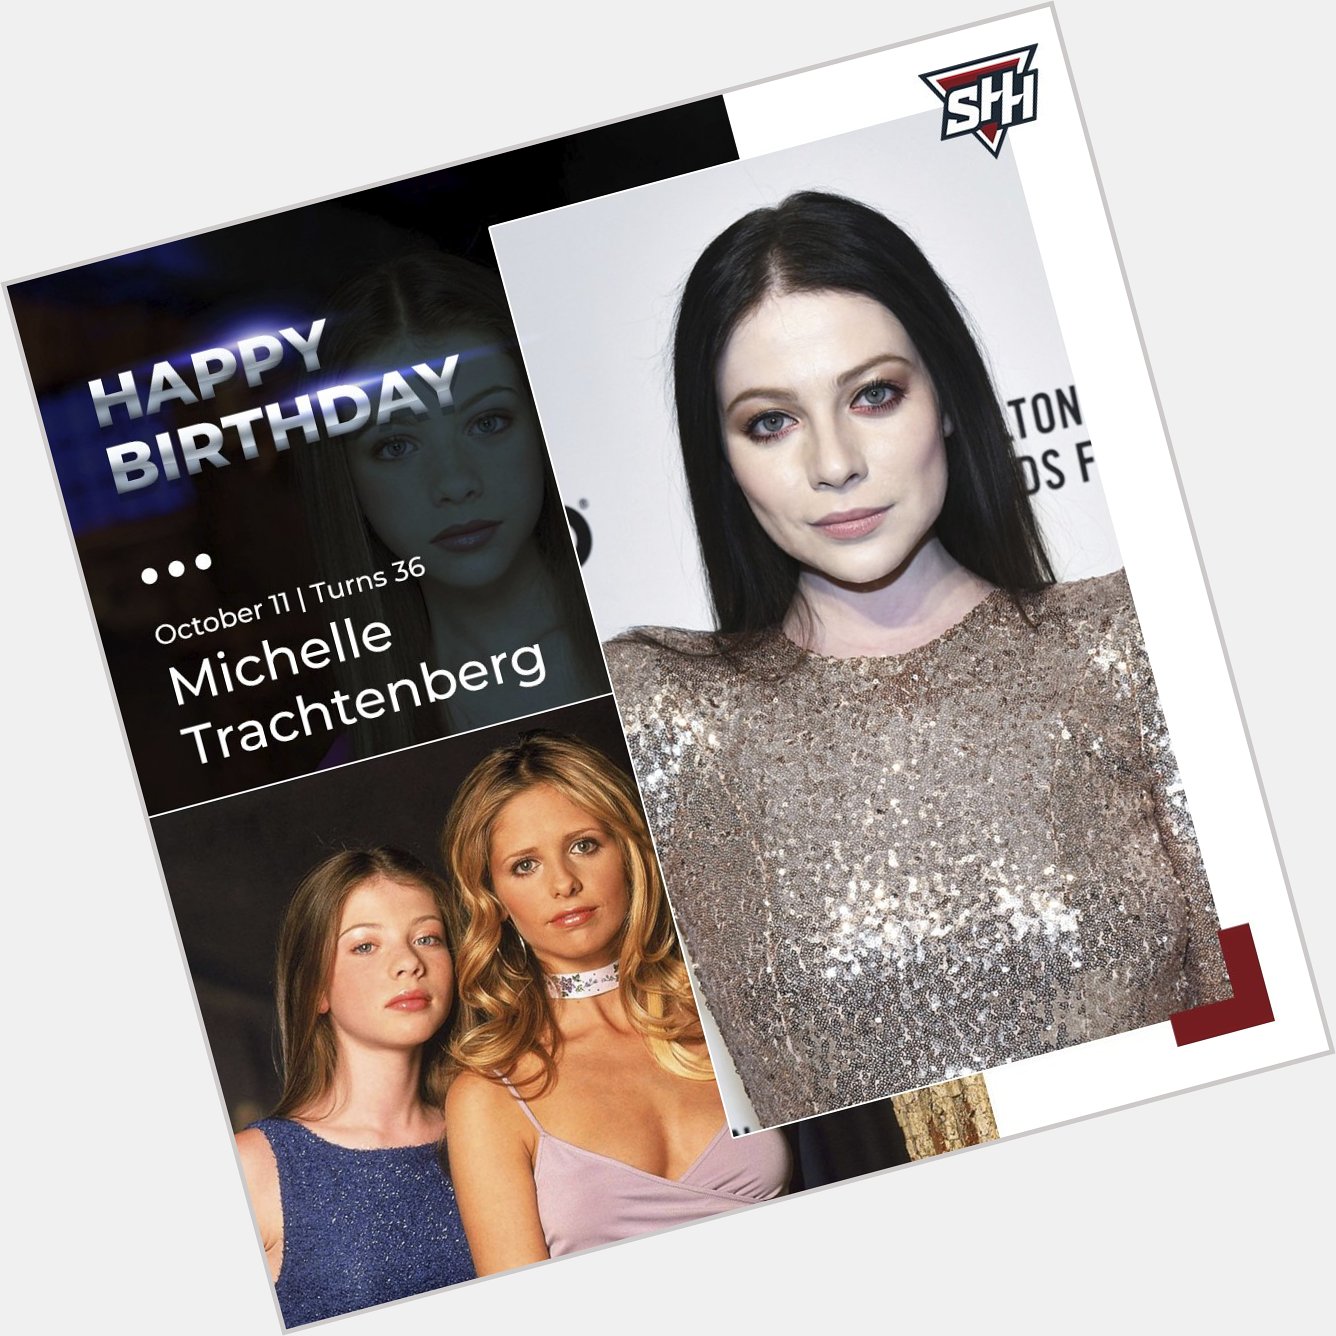 Happy Birthday to actress Michelle Trachtenberg!   